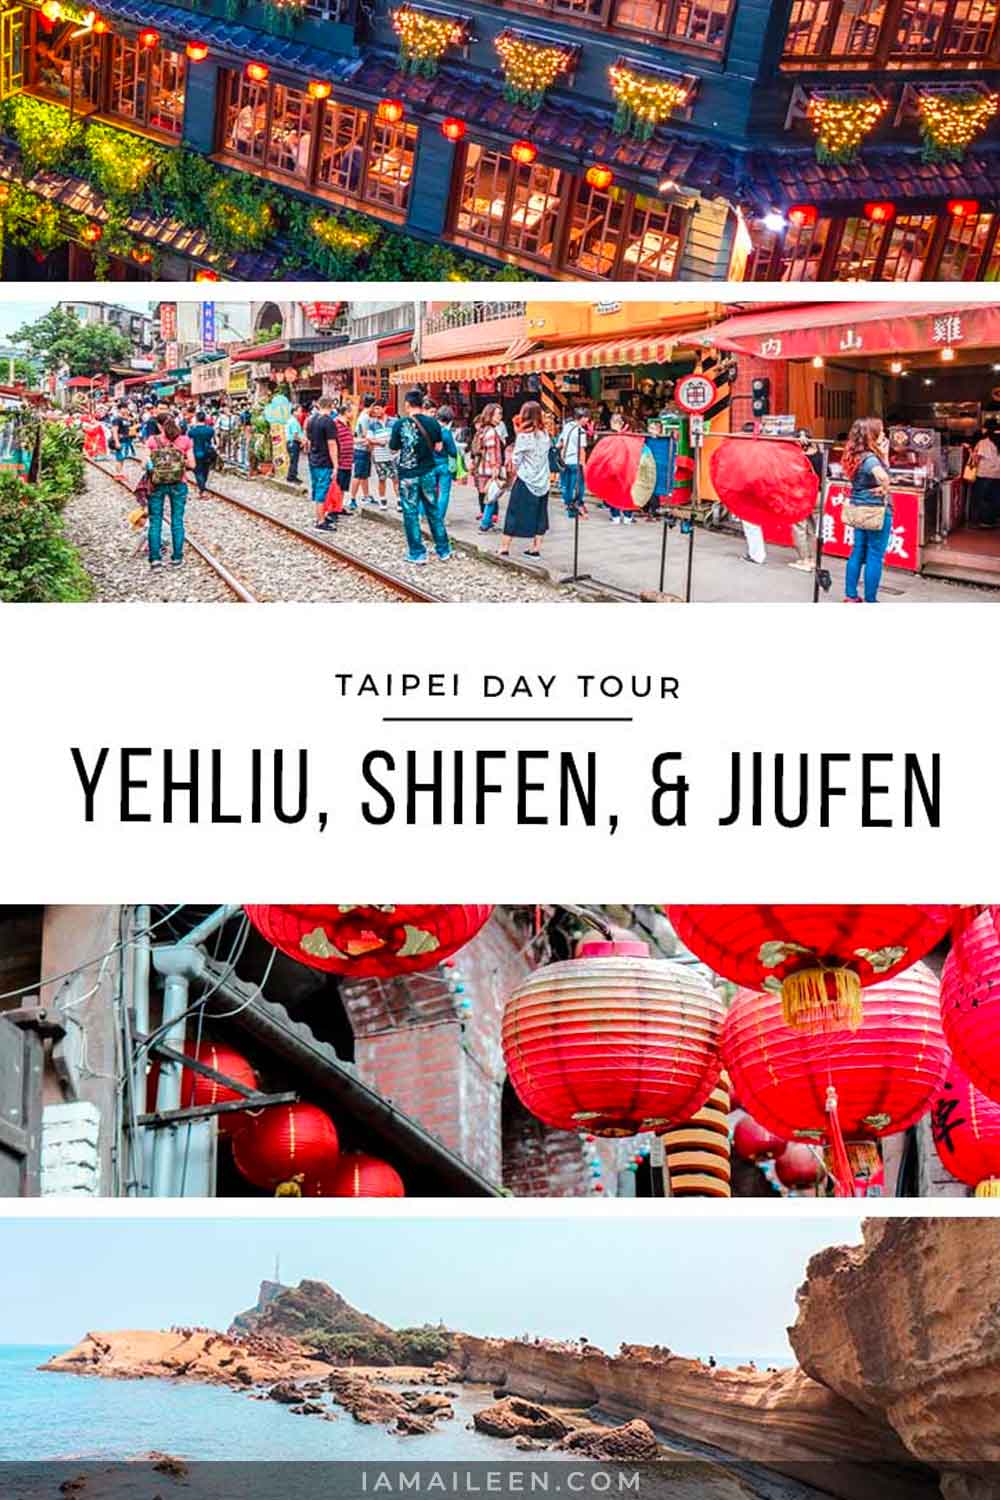 Jiufen Tour: With Stops to Yehliu and Shifen (Taipei, Taiwan)